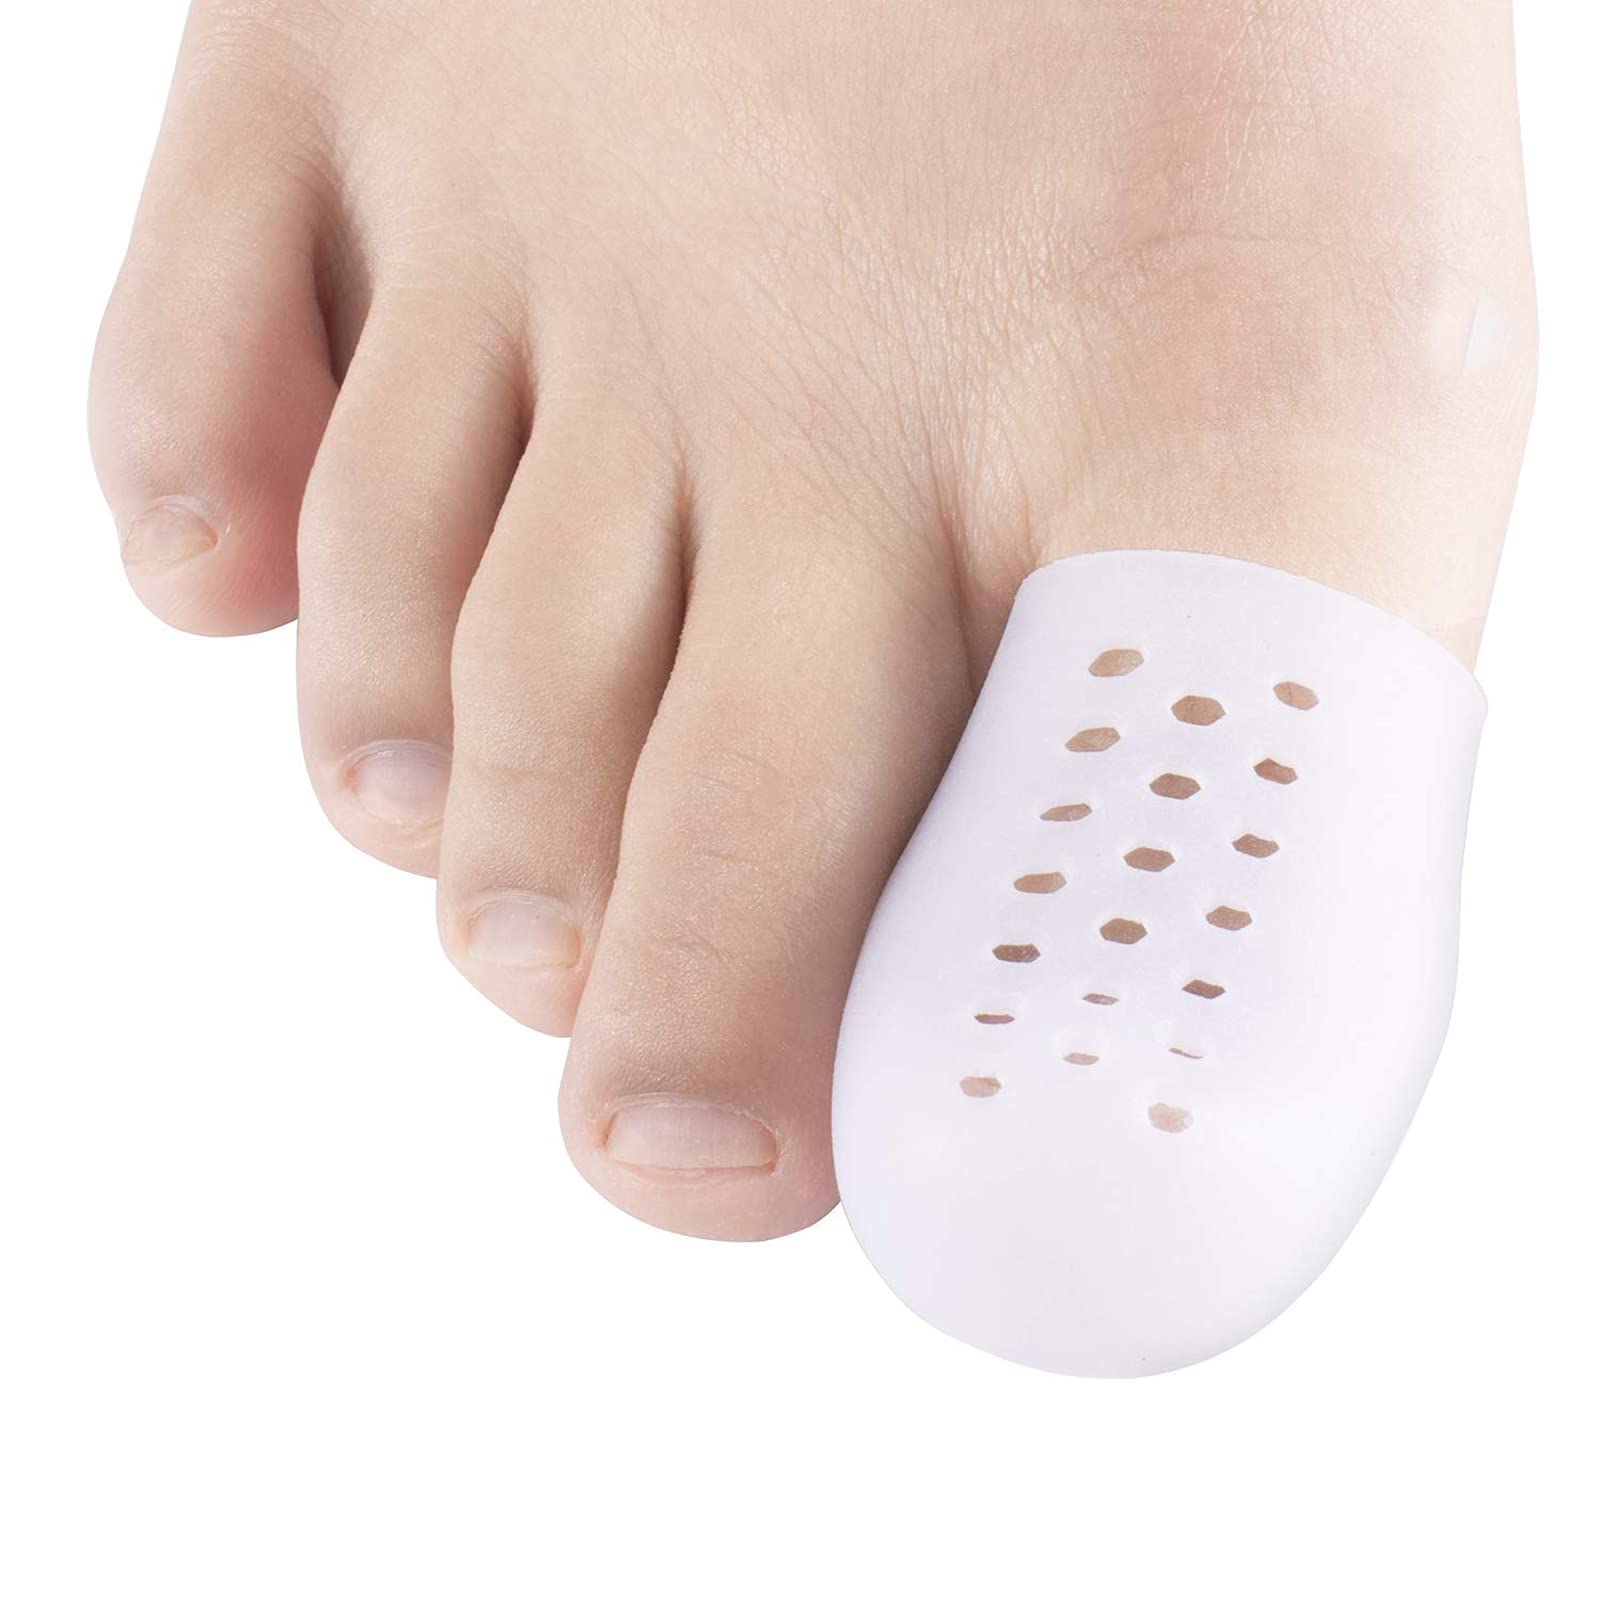 Silipos Toe Caps - Fabric and Gel Pad Toe Protector - Simply Medical